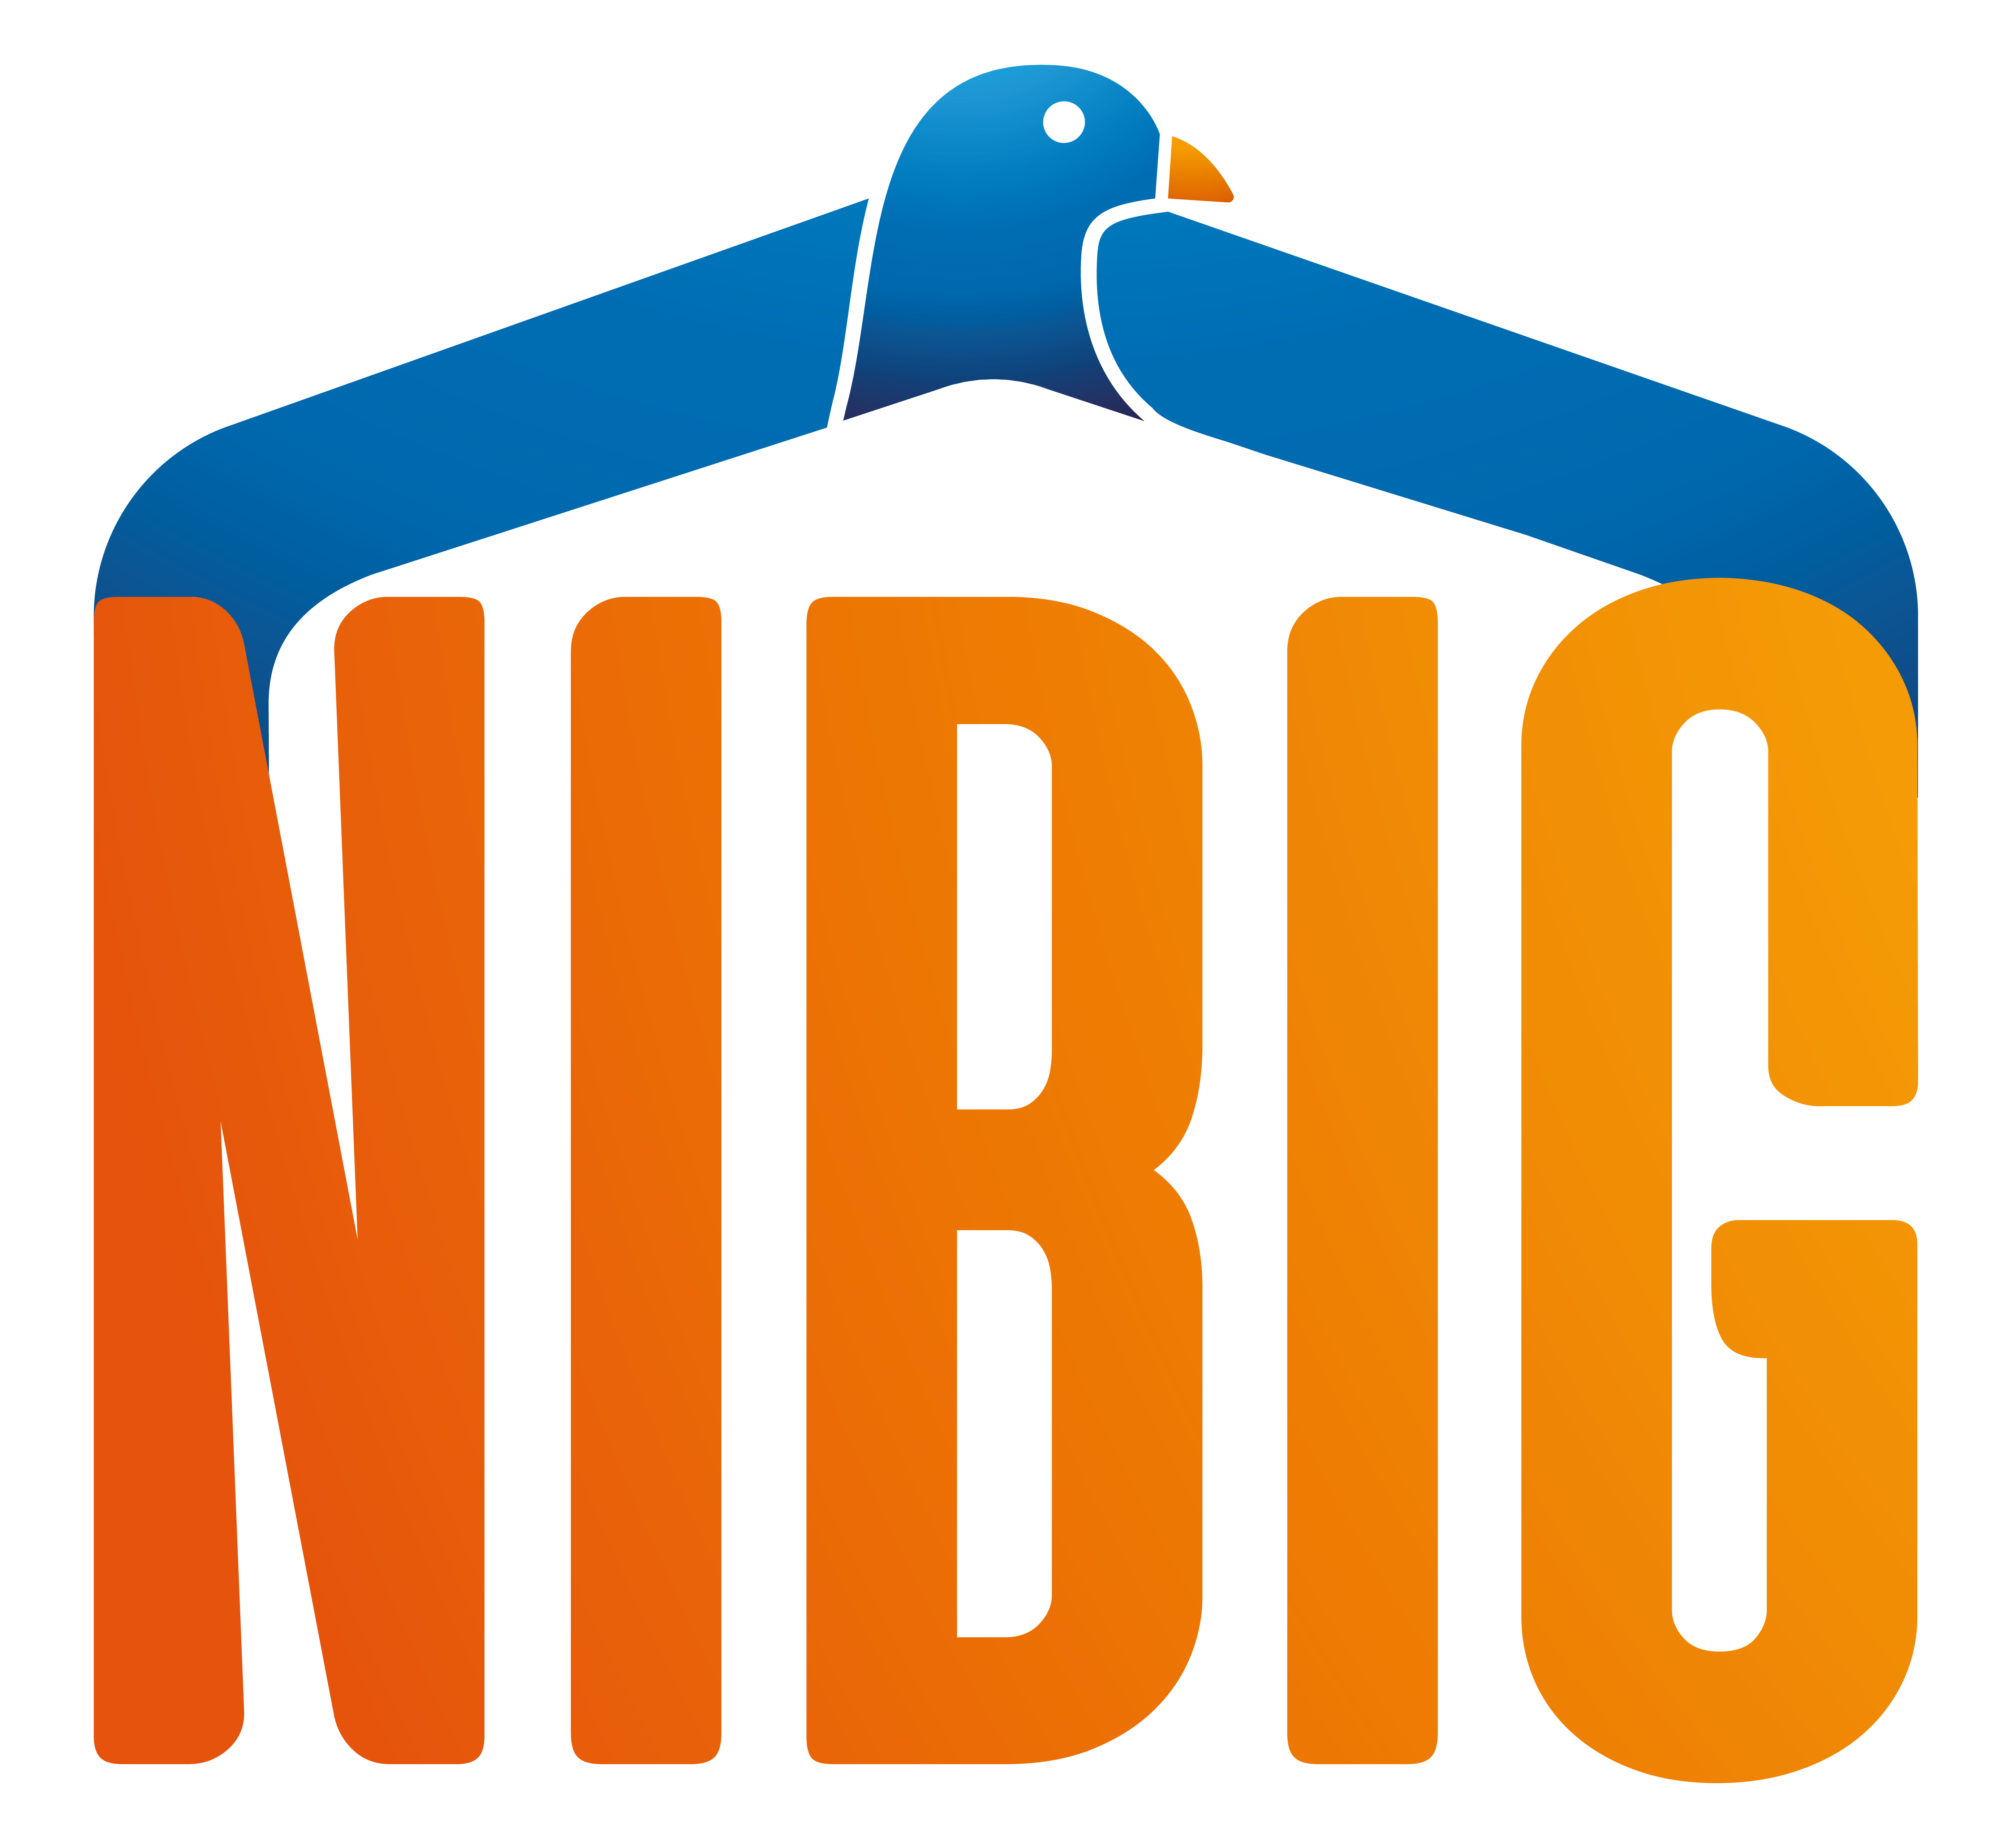 Logo NIBIG